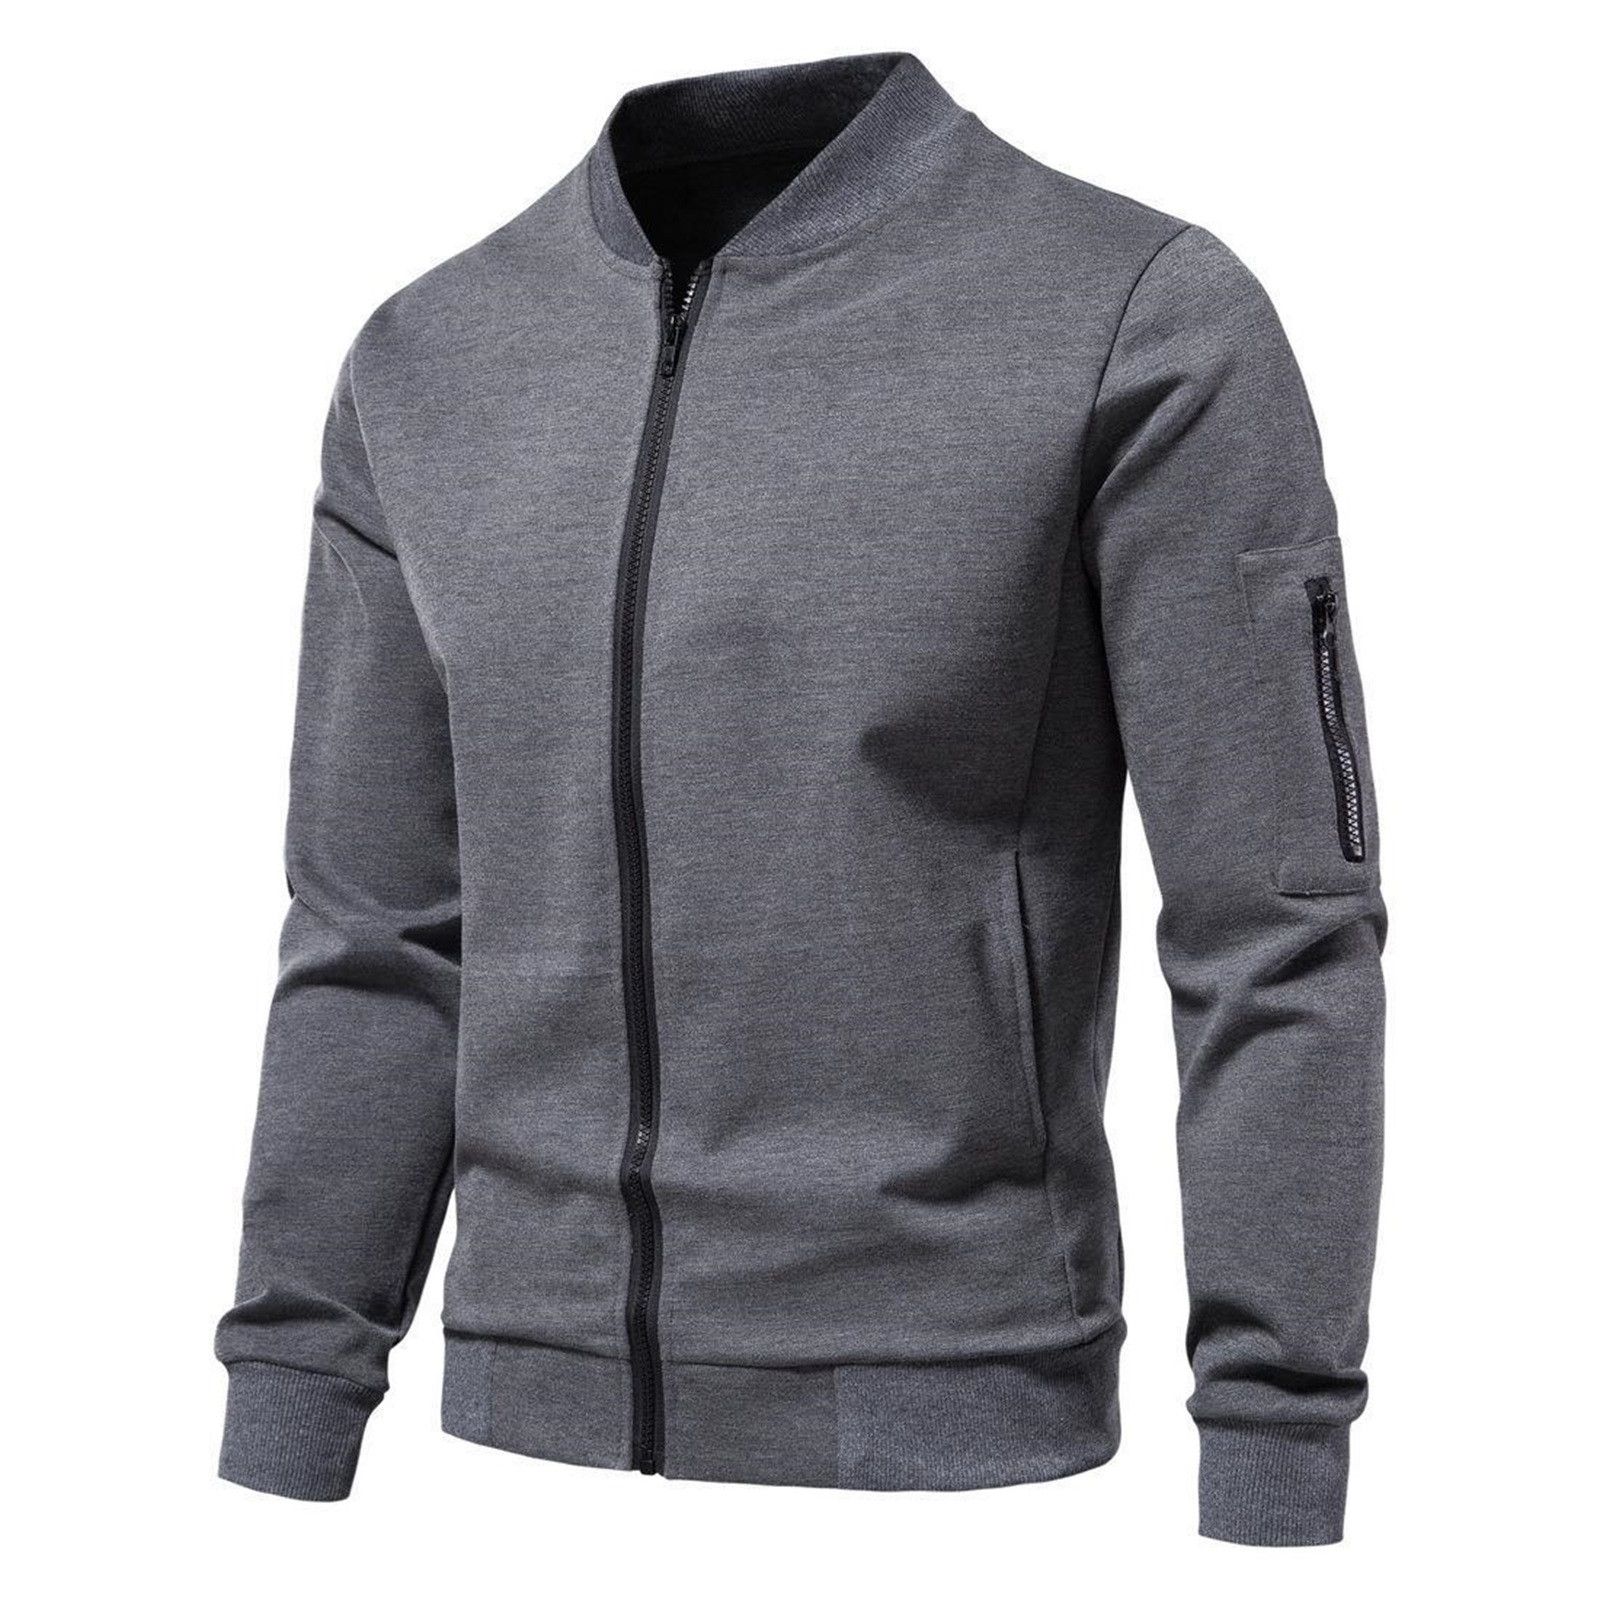 Jackets for Men Lightweight Windbreaker Slim Fit Active Outerwear ...